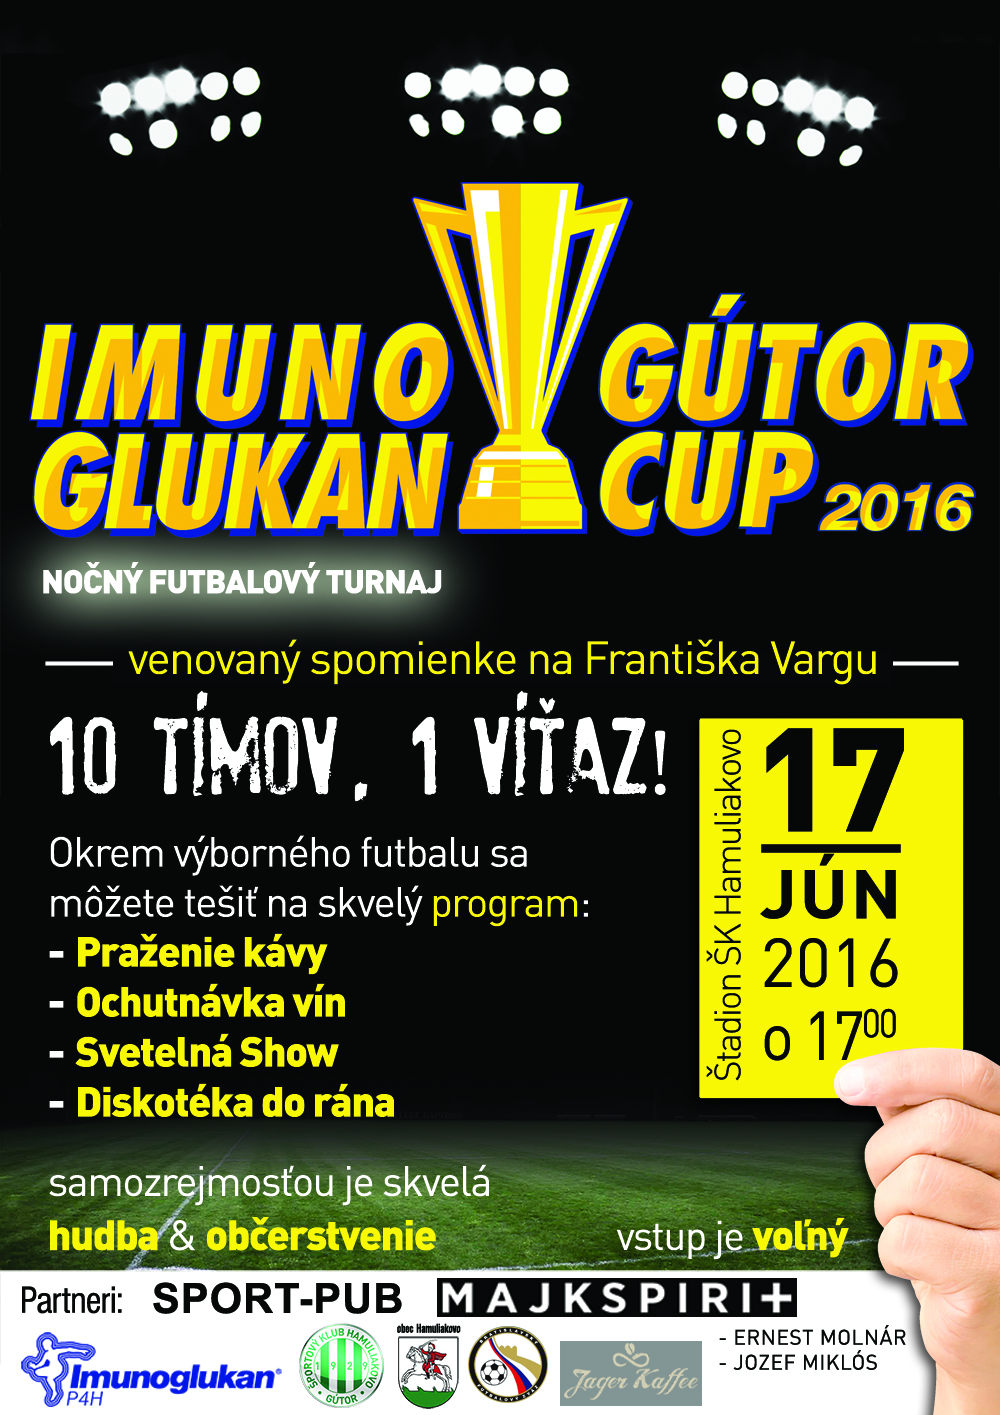 Gutor cup- nocny turnaj final